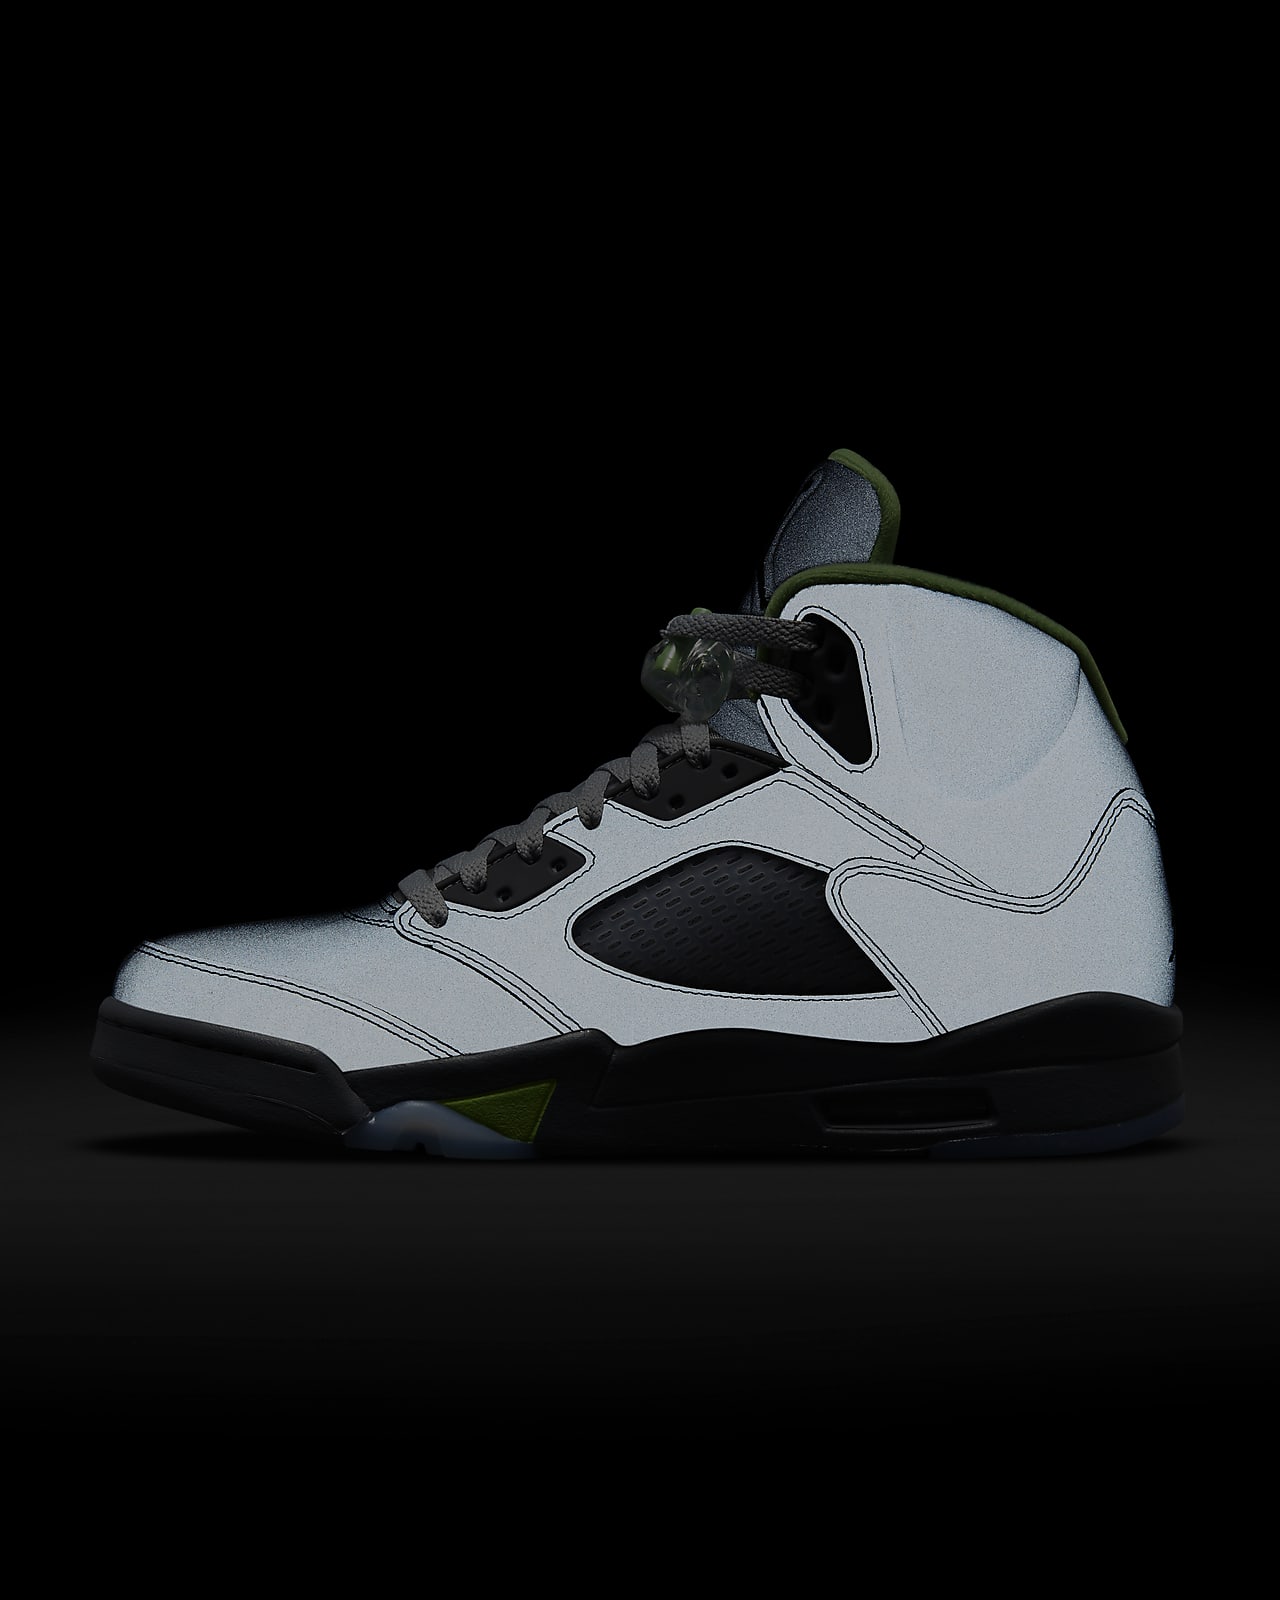 Air Jordan 5 Retro “Green Bean” Men's Shoes